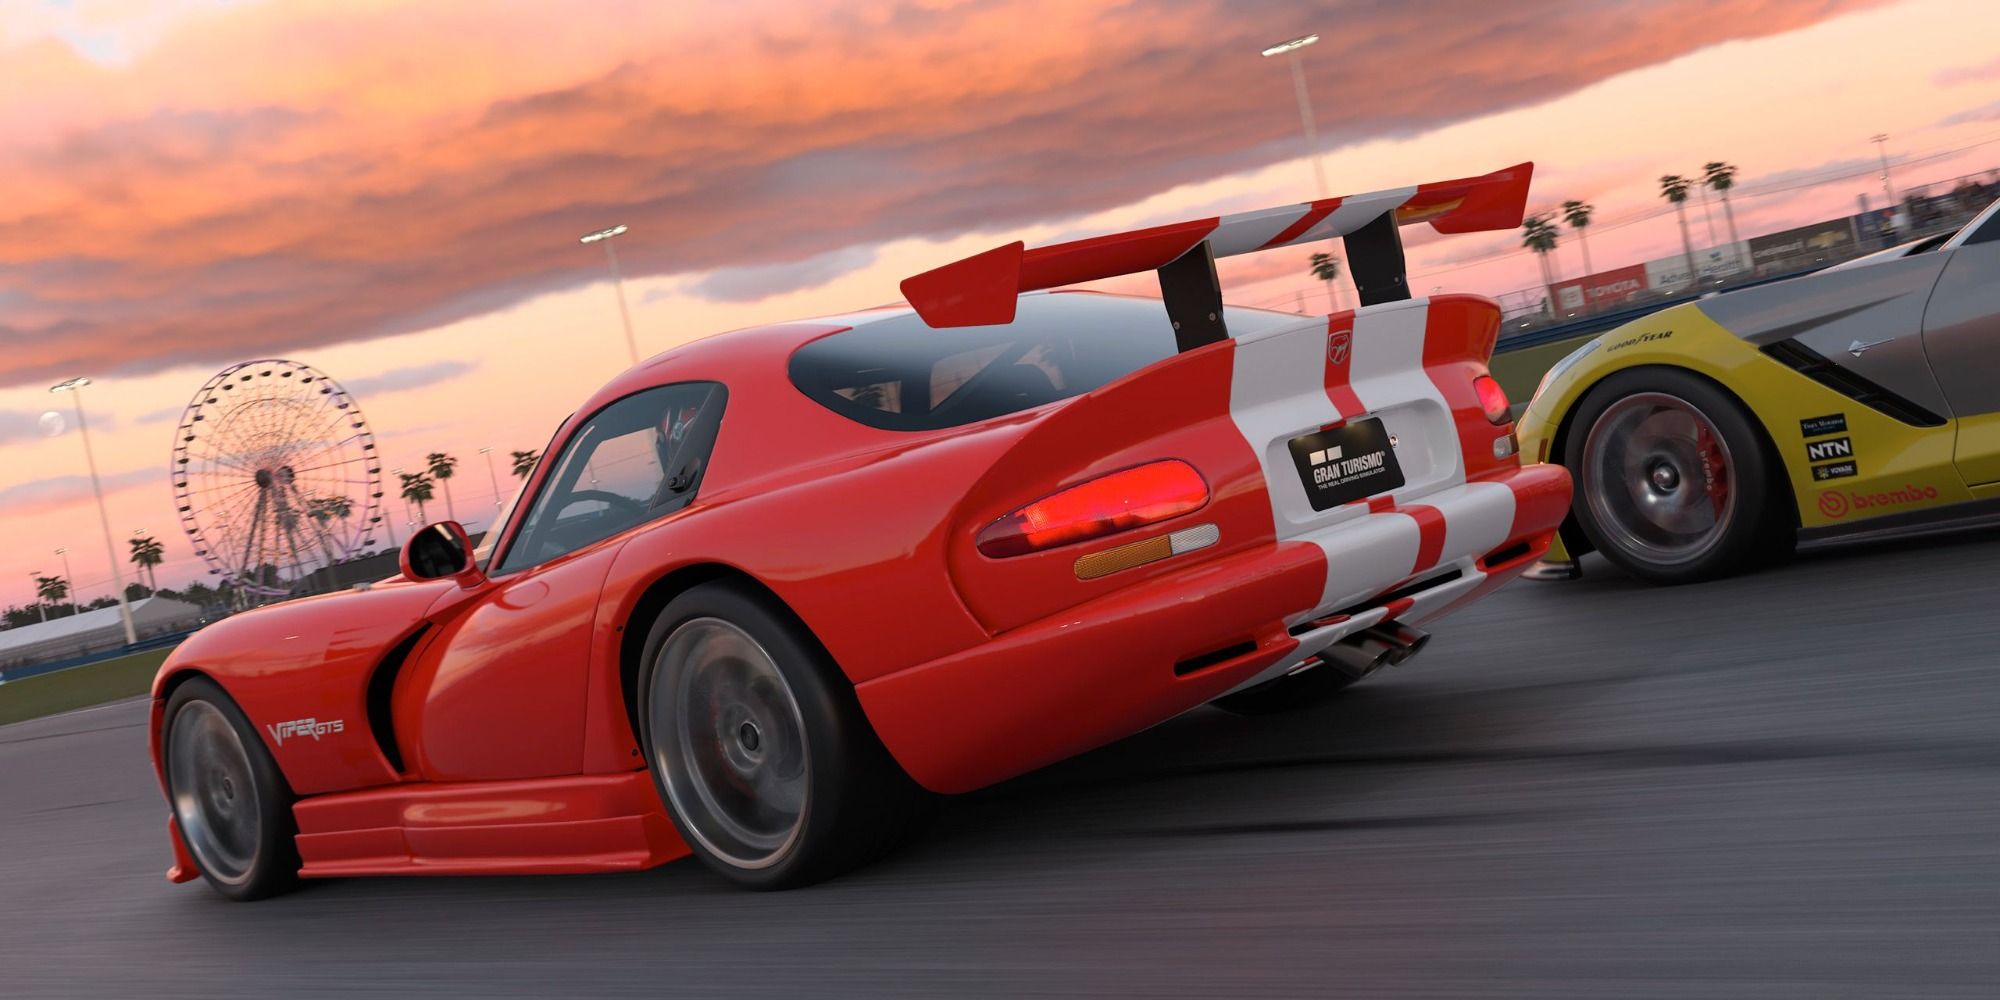 Gran Turismo PC version under consideration, says Polyphony